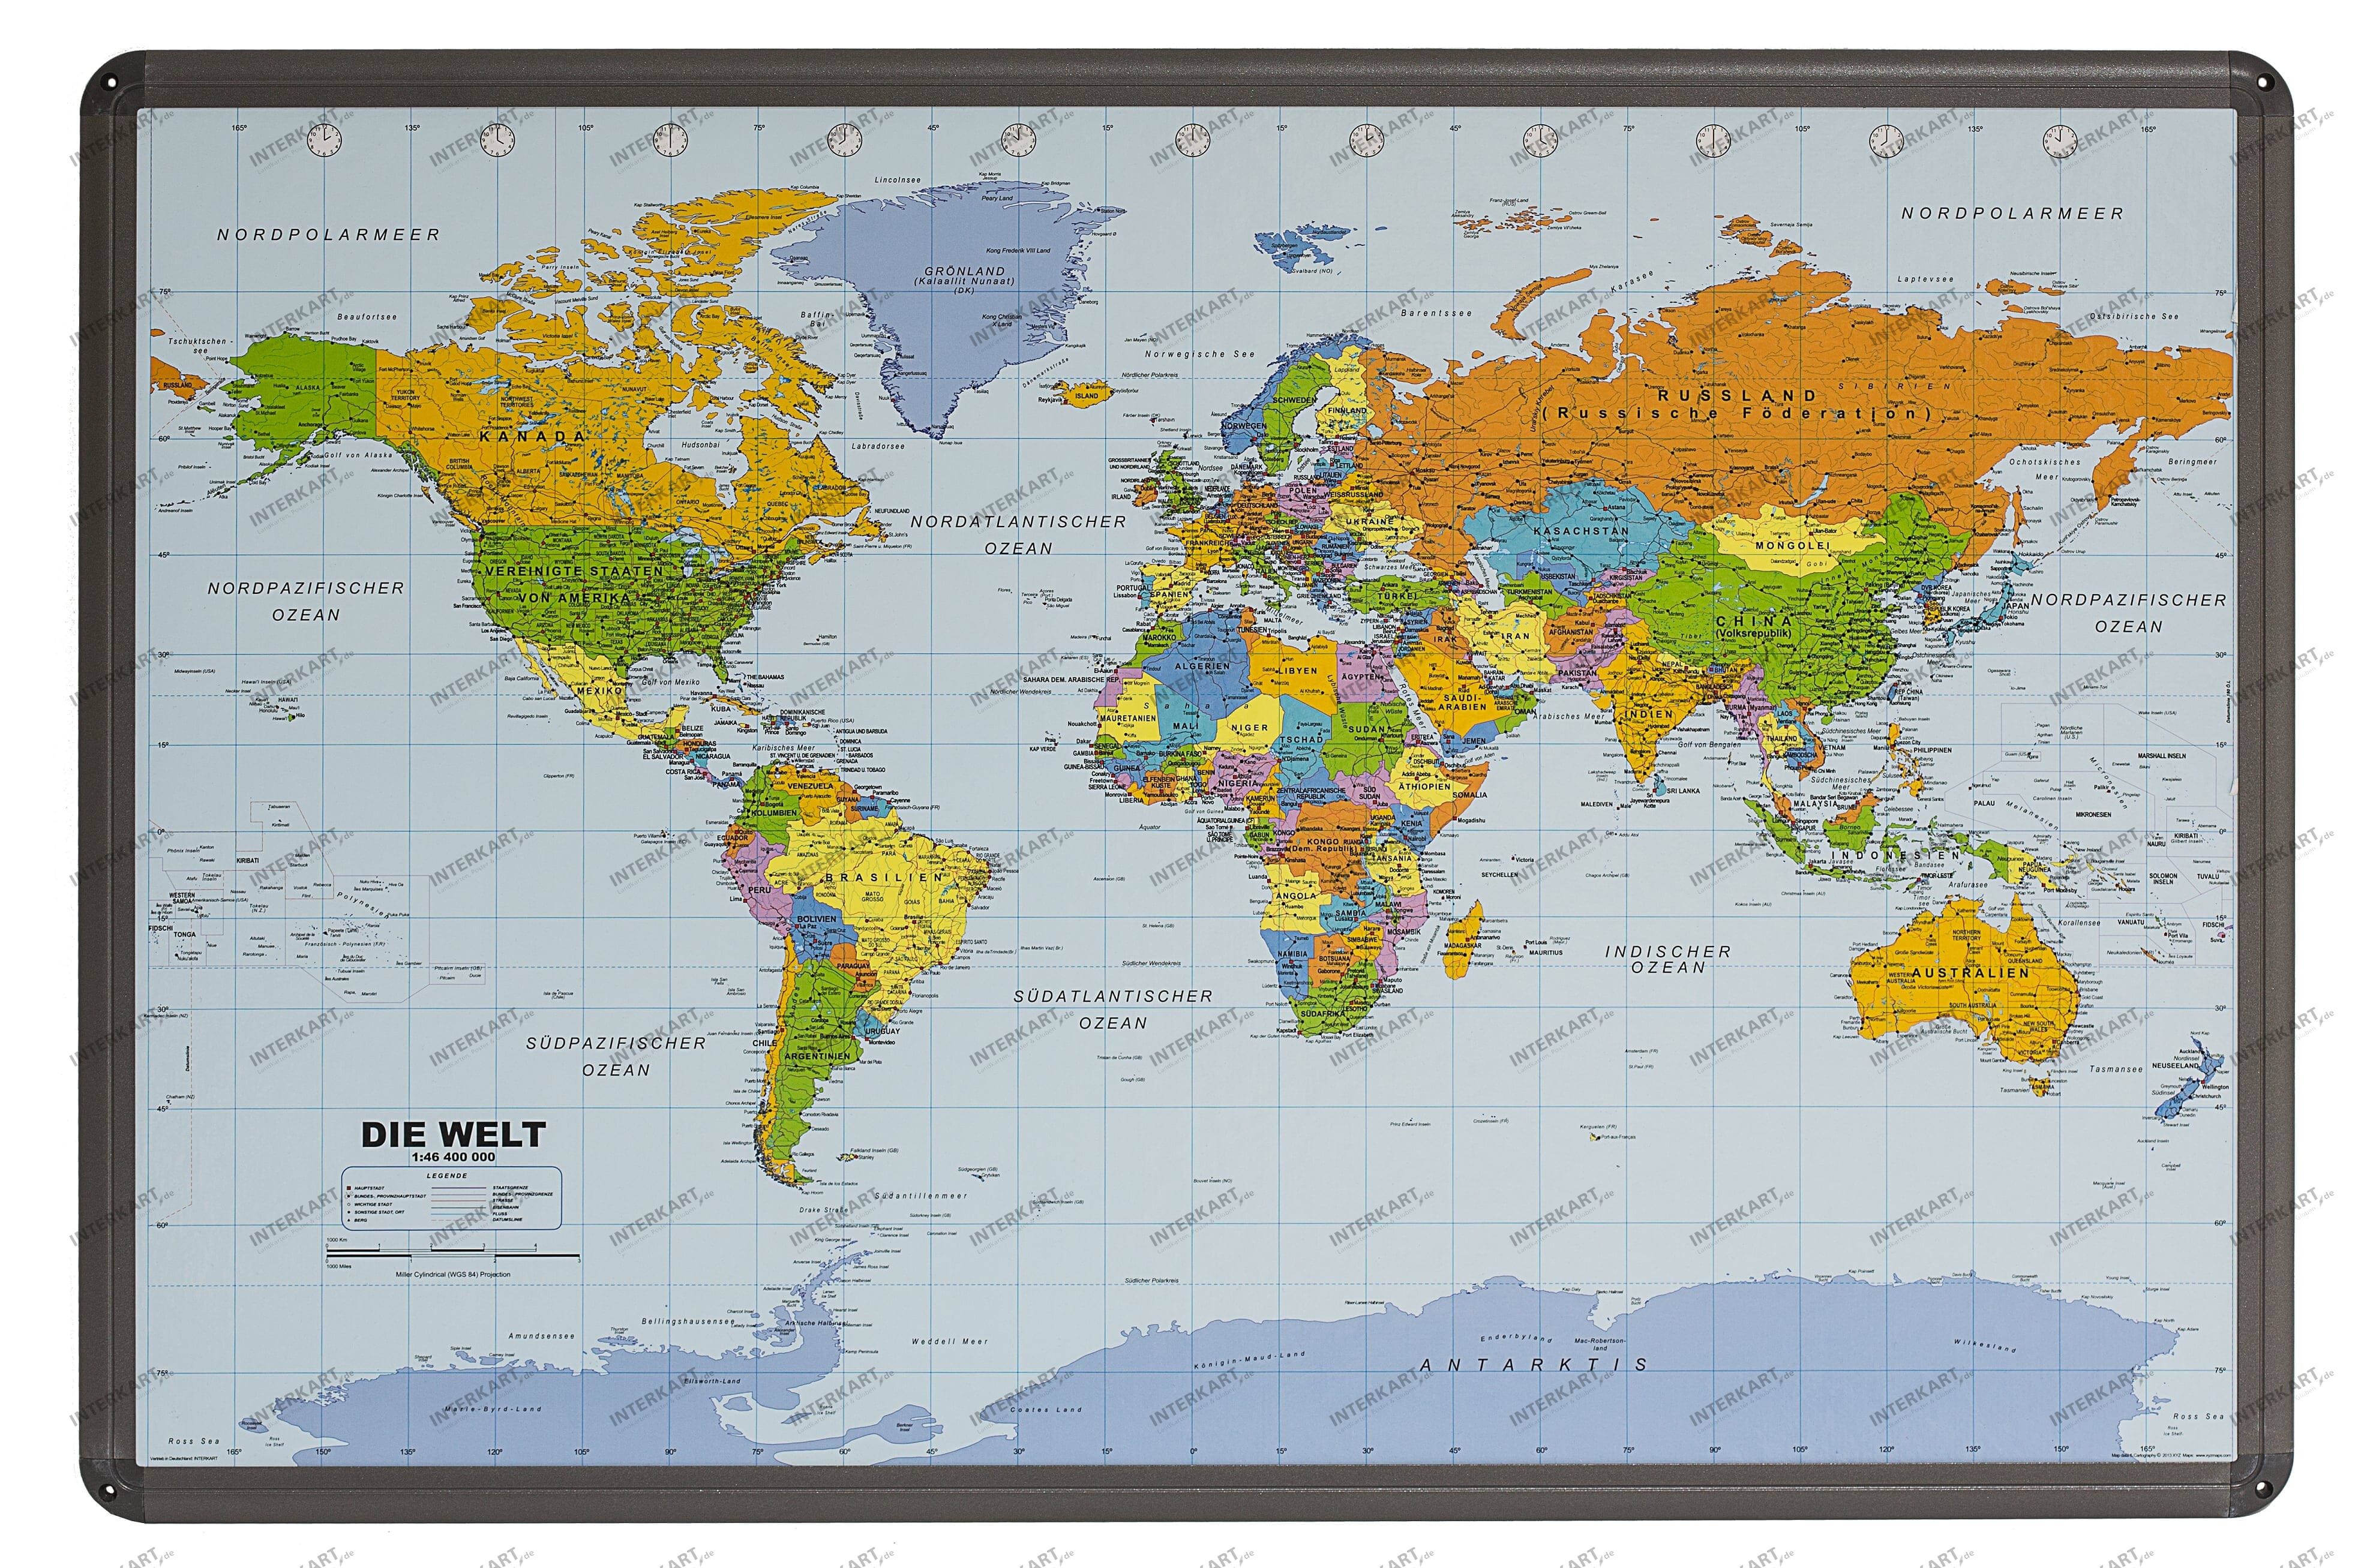 60 x 40cm Kork Pinnwand mit Weltkarte Größe 